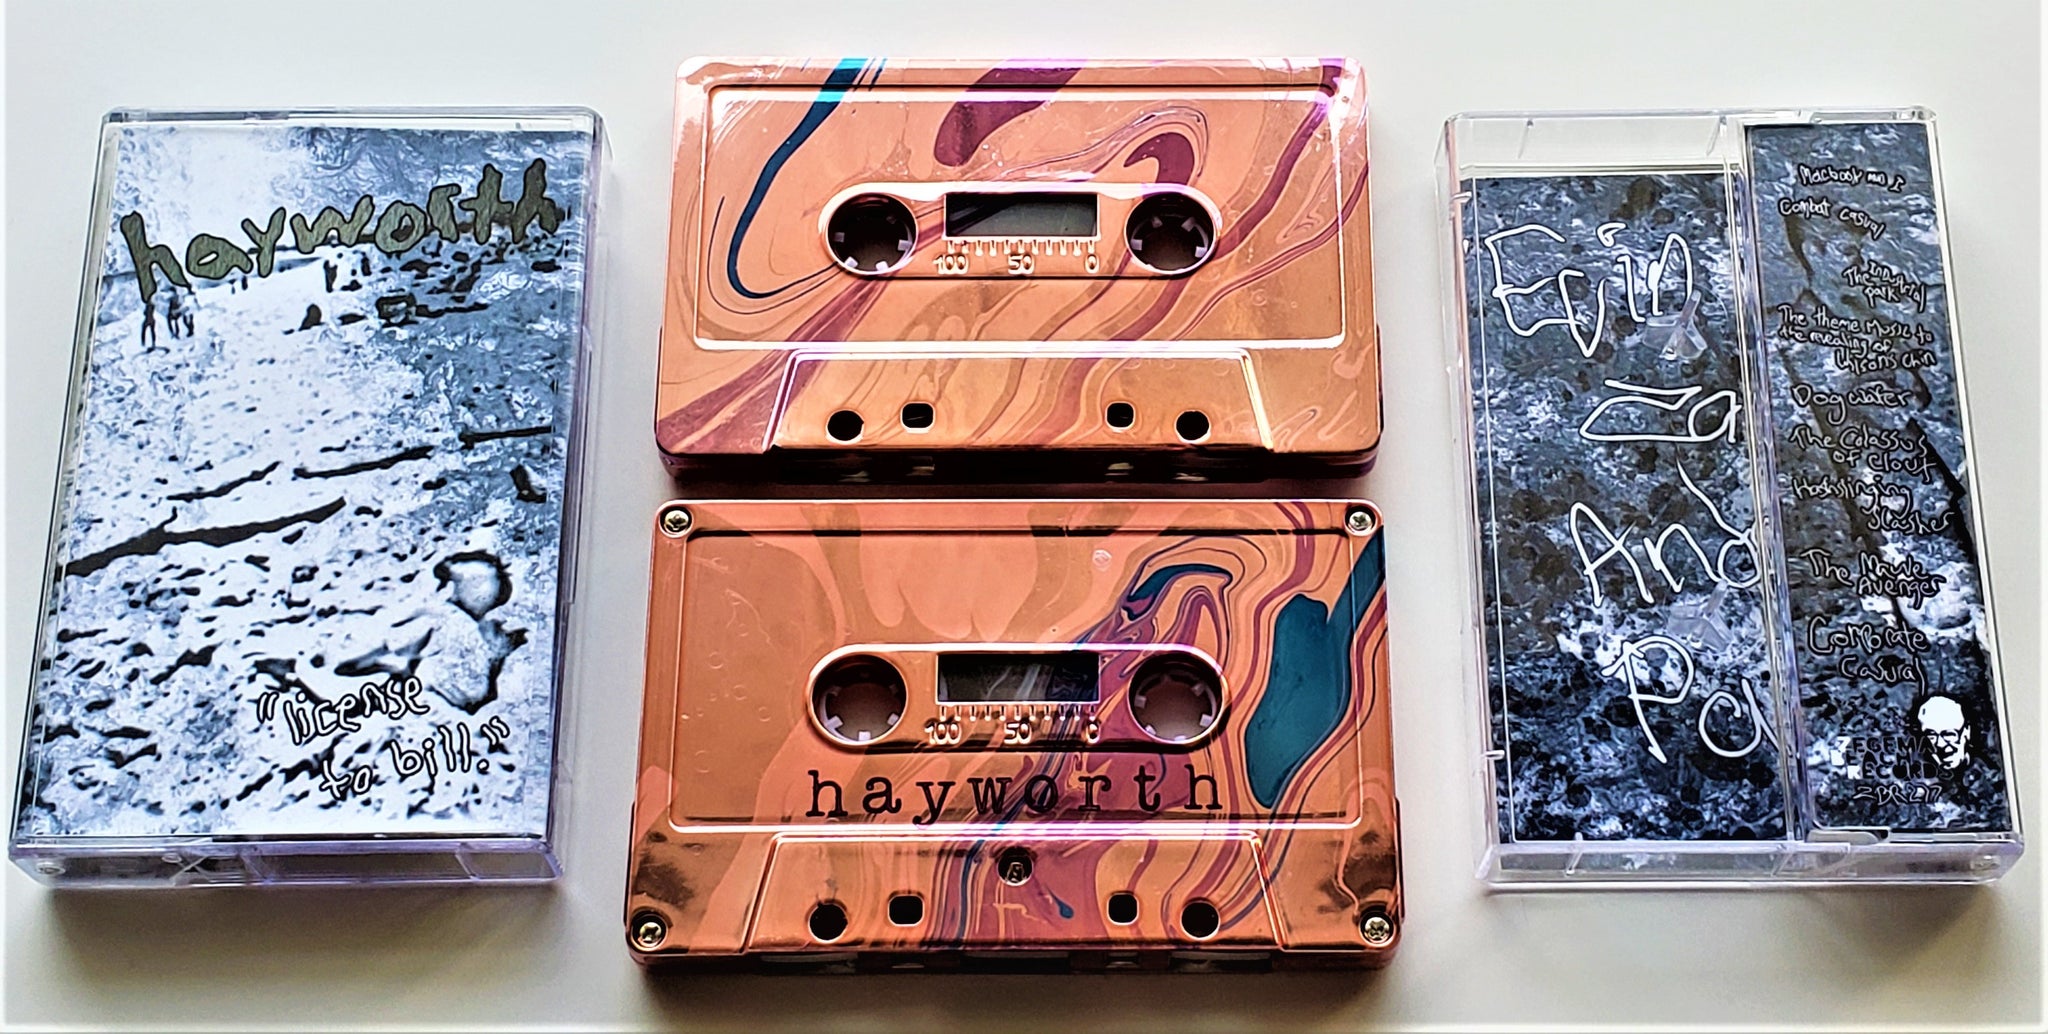 HAYWORTH - License To Bill (cassette)